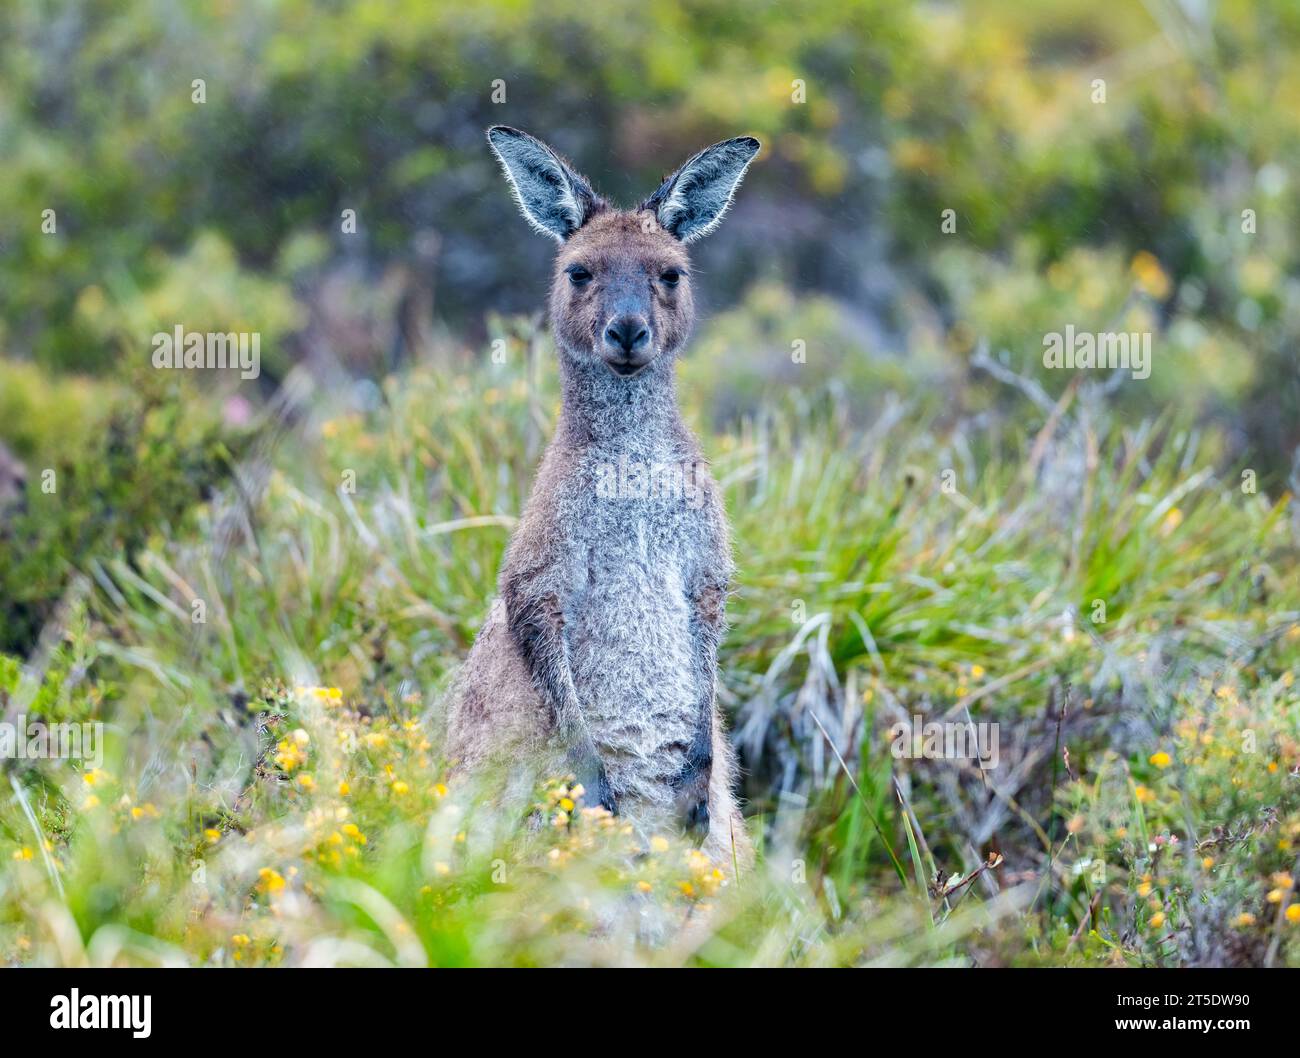 A Western Grey Kangaroo (Macropus fuliginosus) in the bushes. Australia. Stock Photo